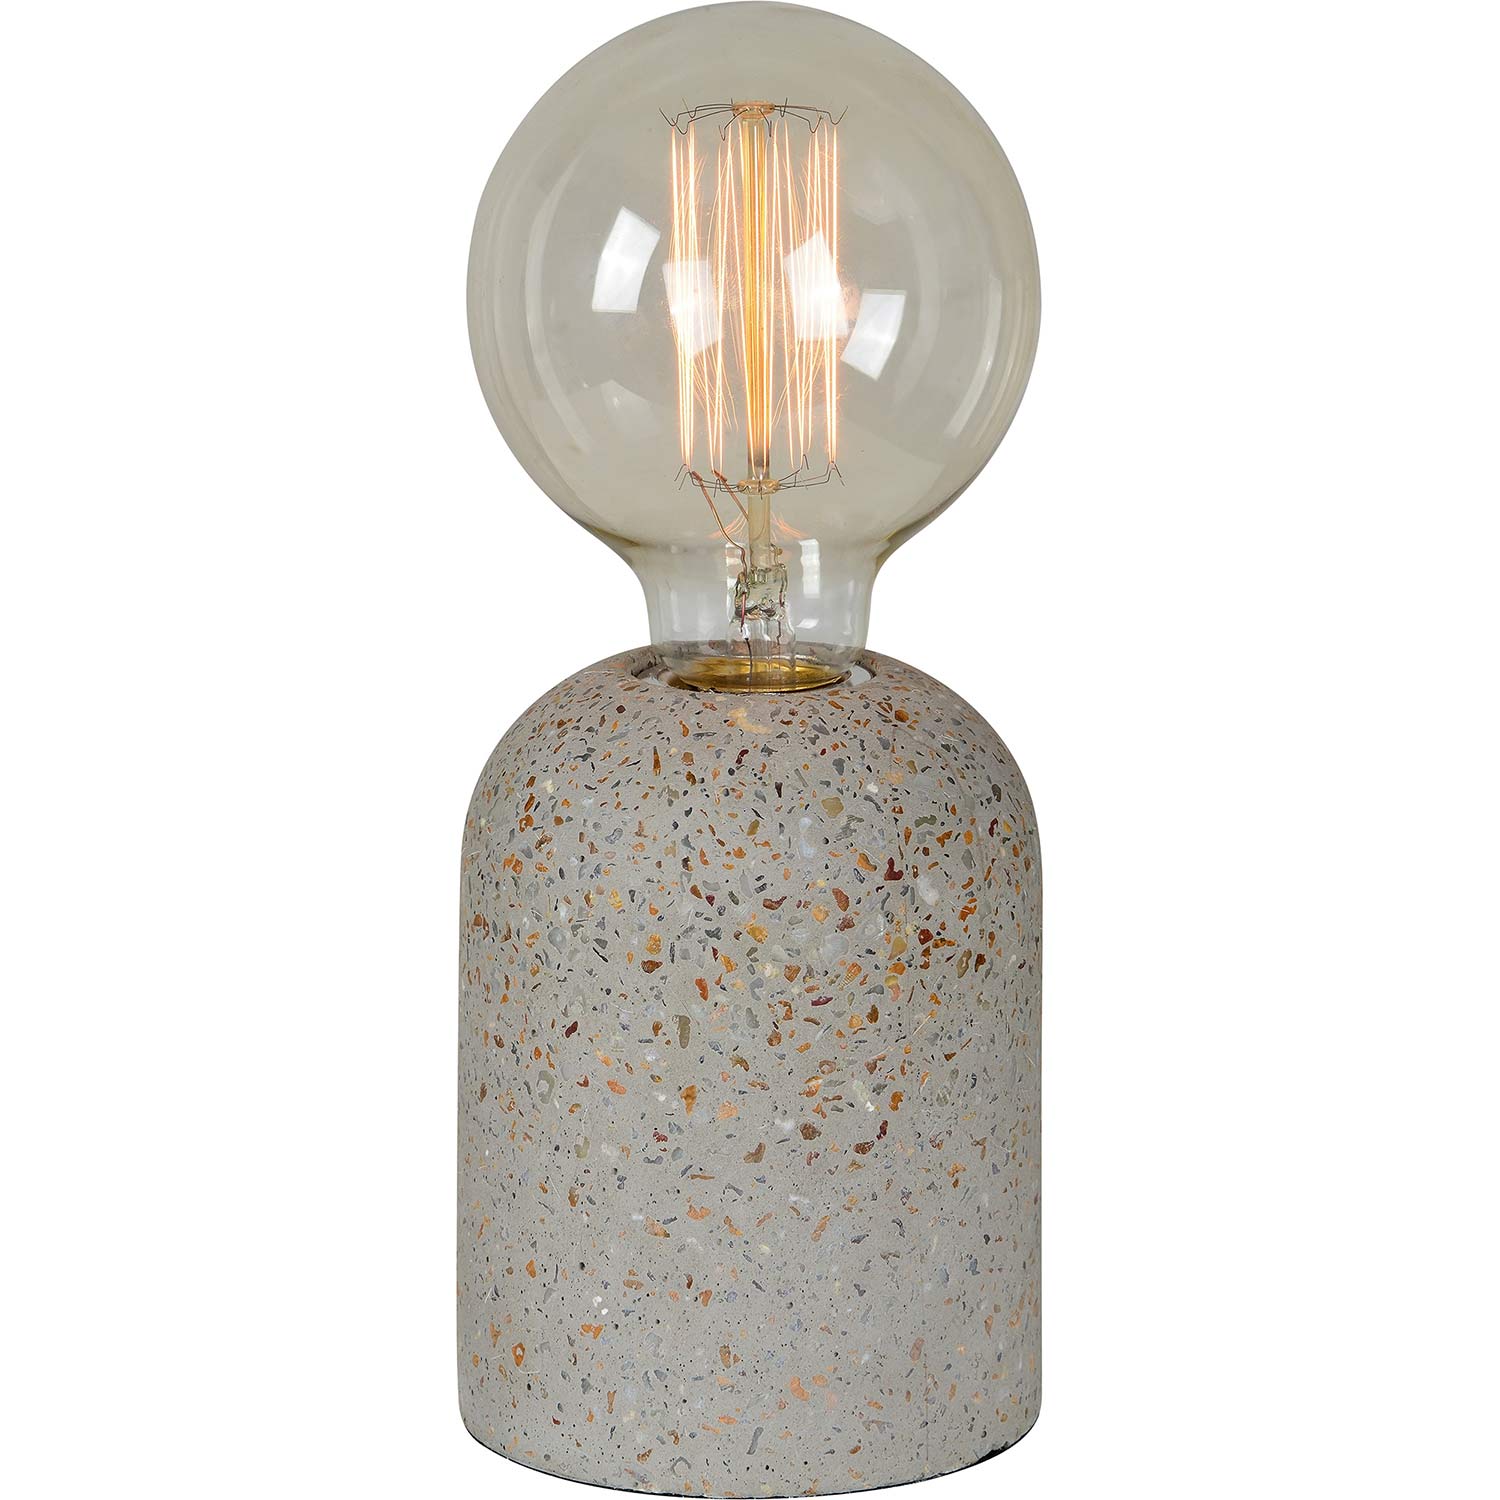 Ren-Wil Sobella Table Lamp - Beige Cement/Stone Speckles